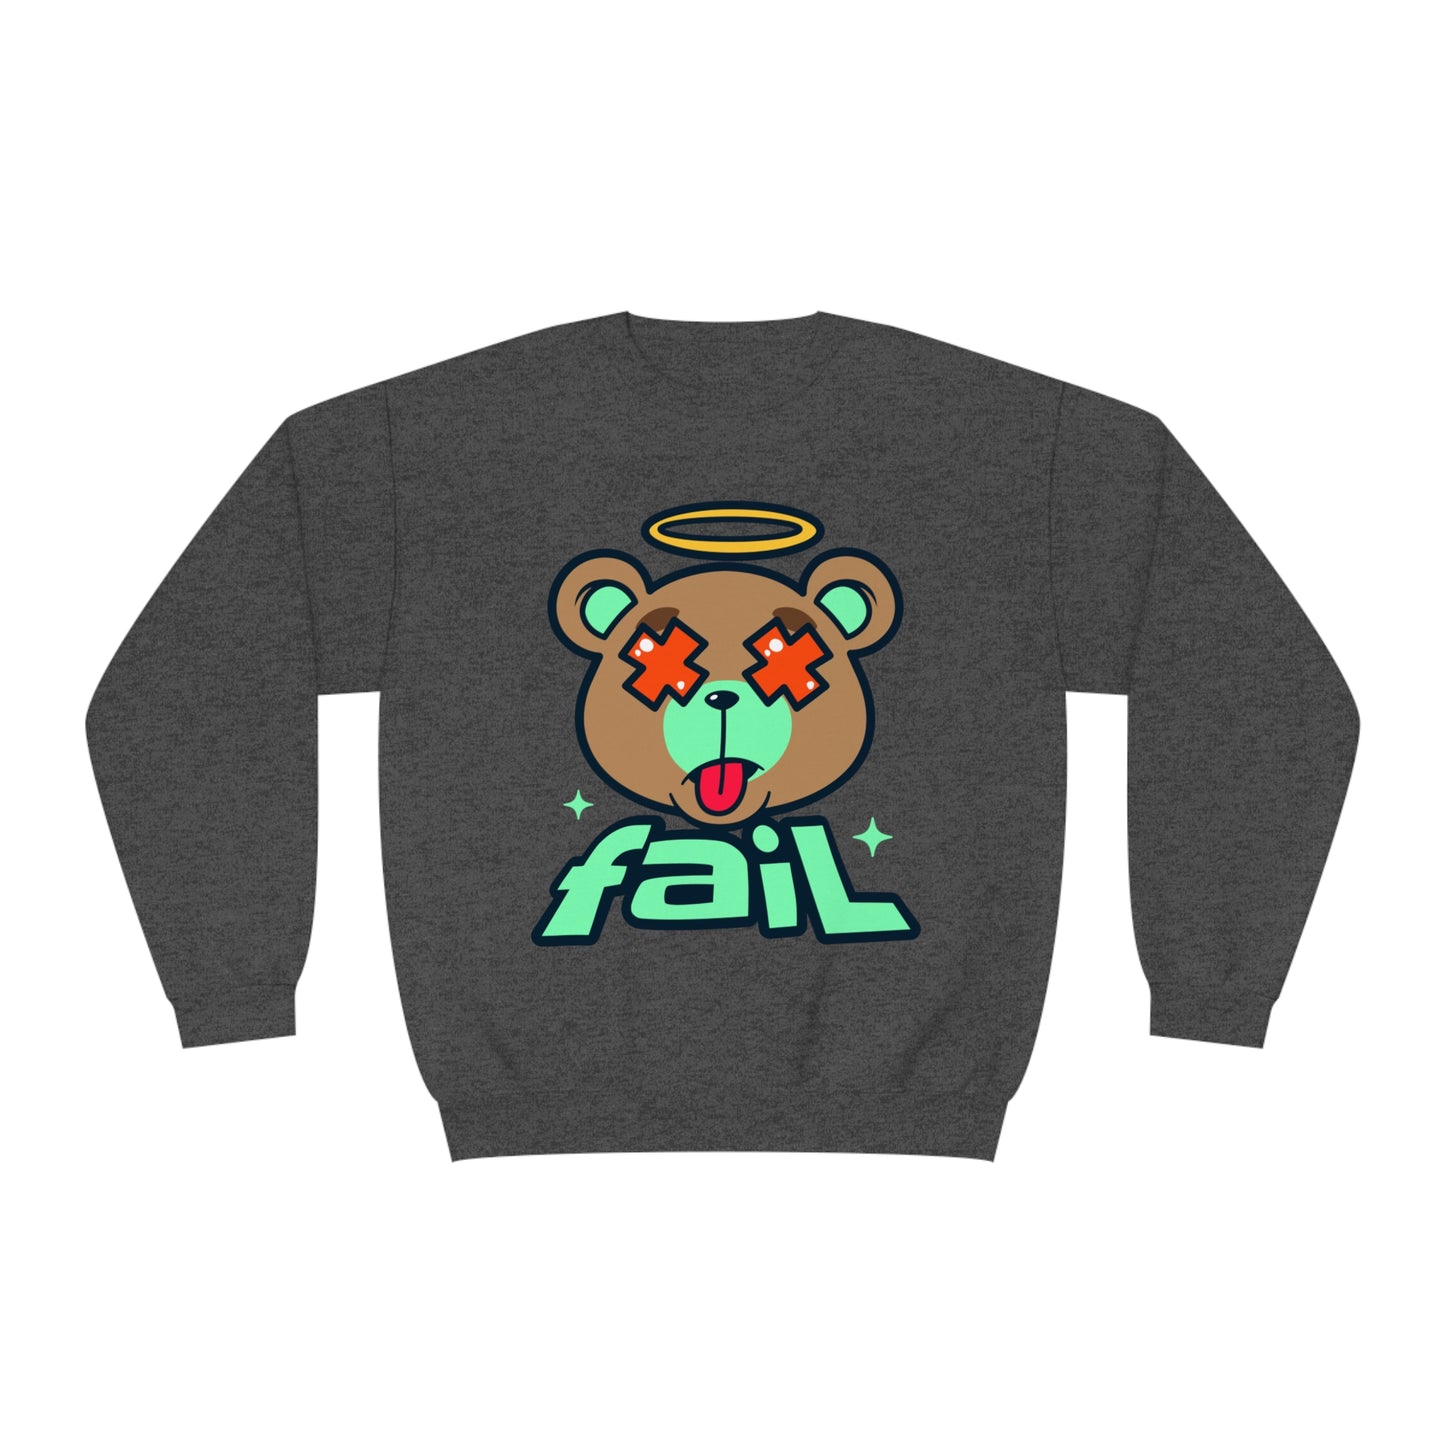 Epic Fail Bear Sweatshirt